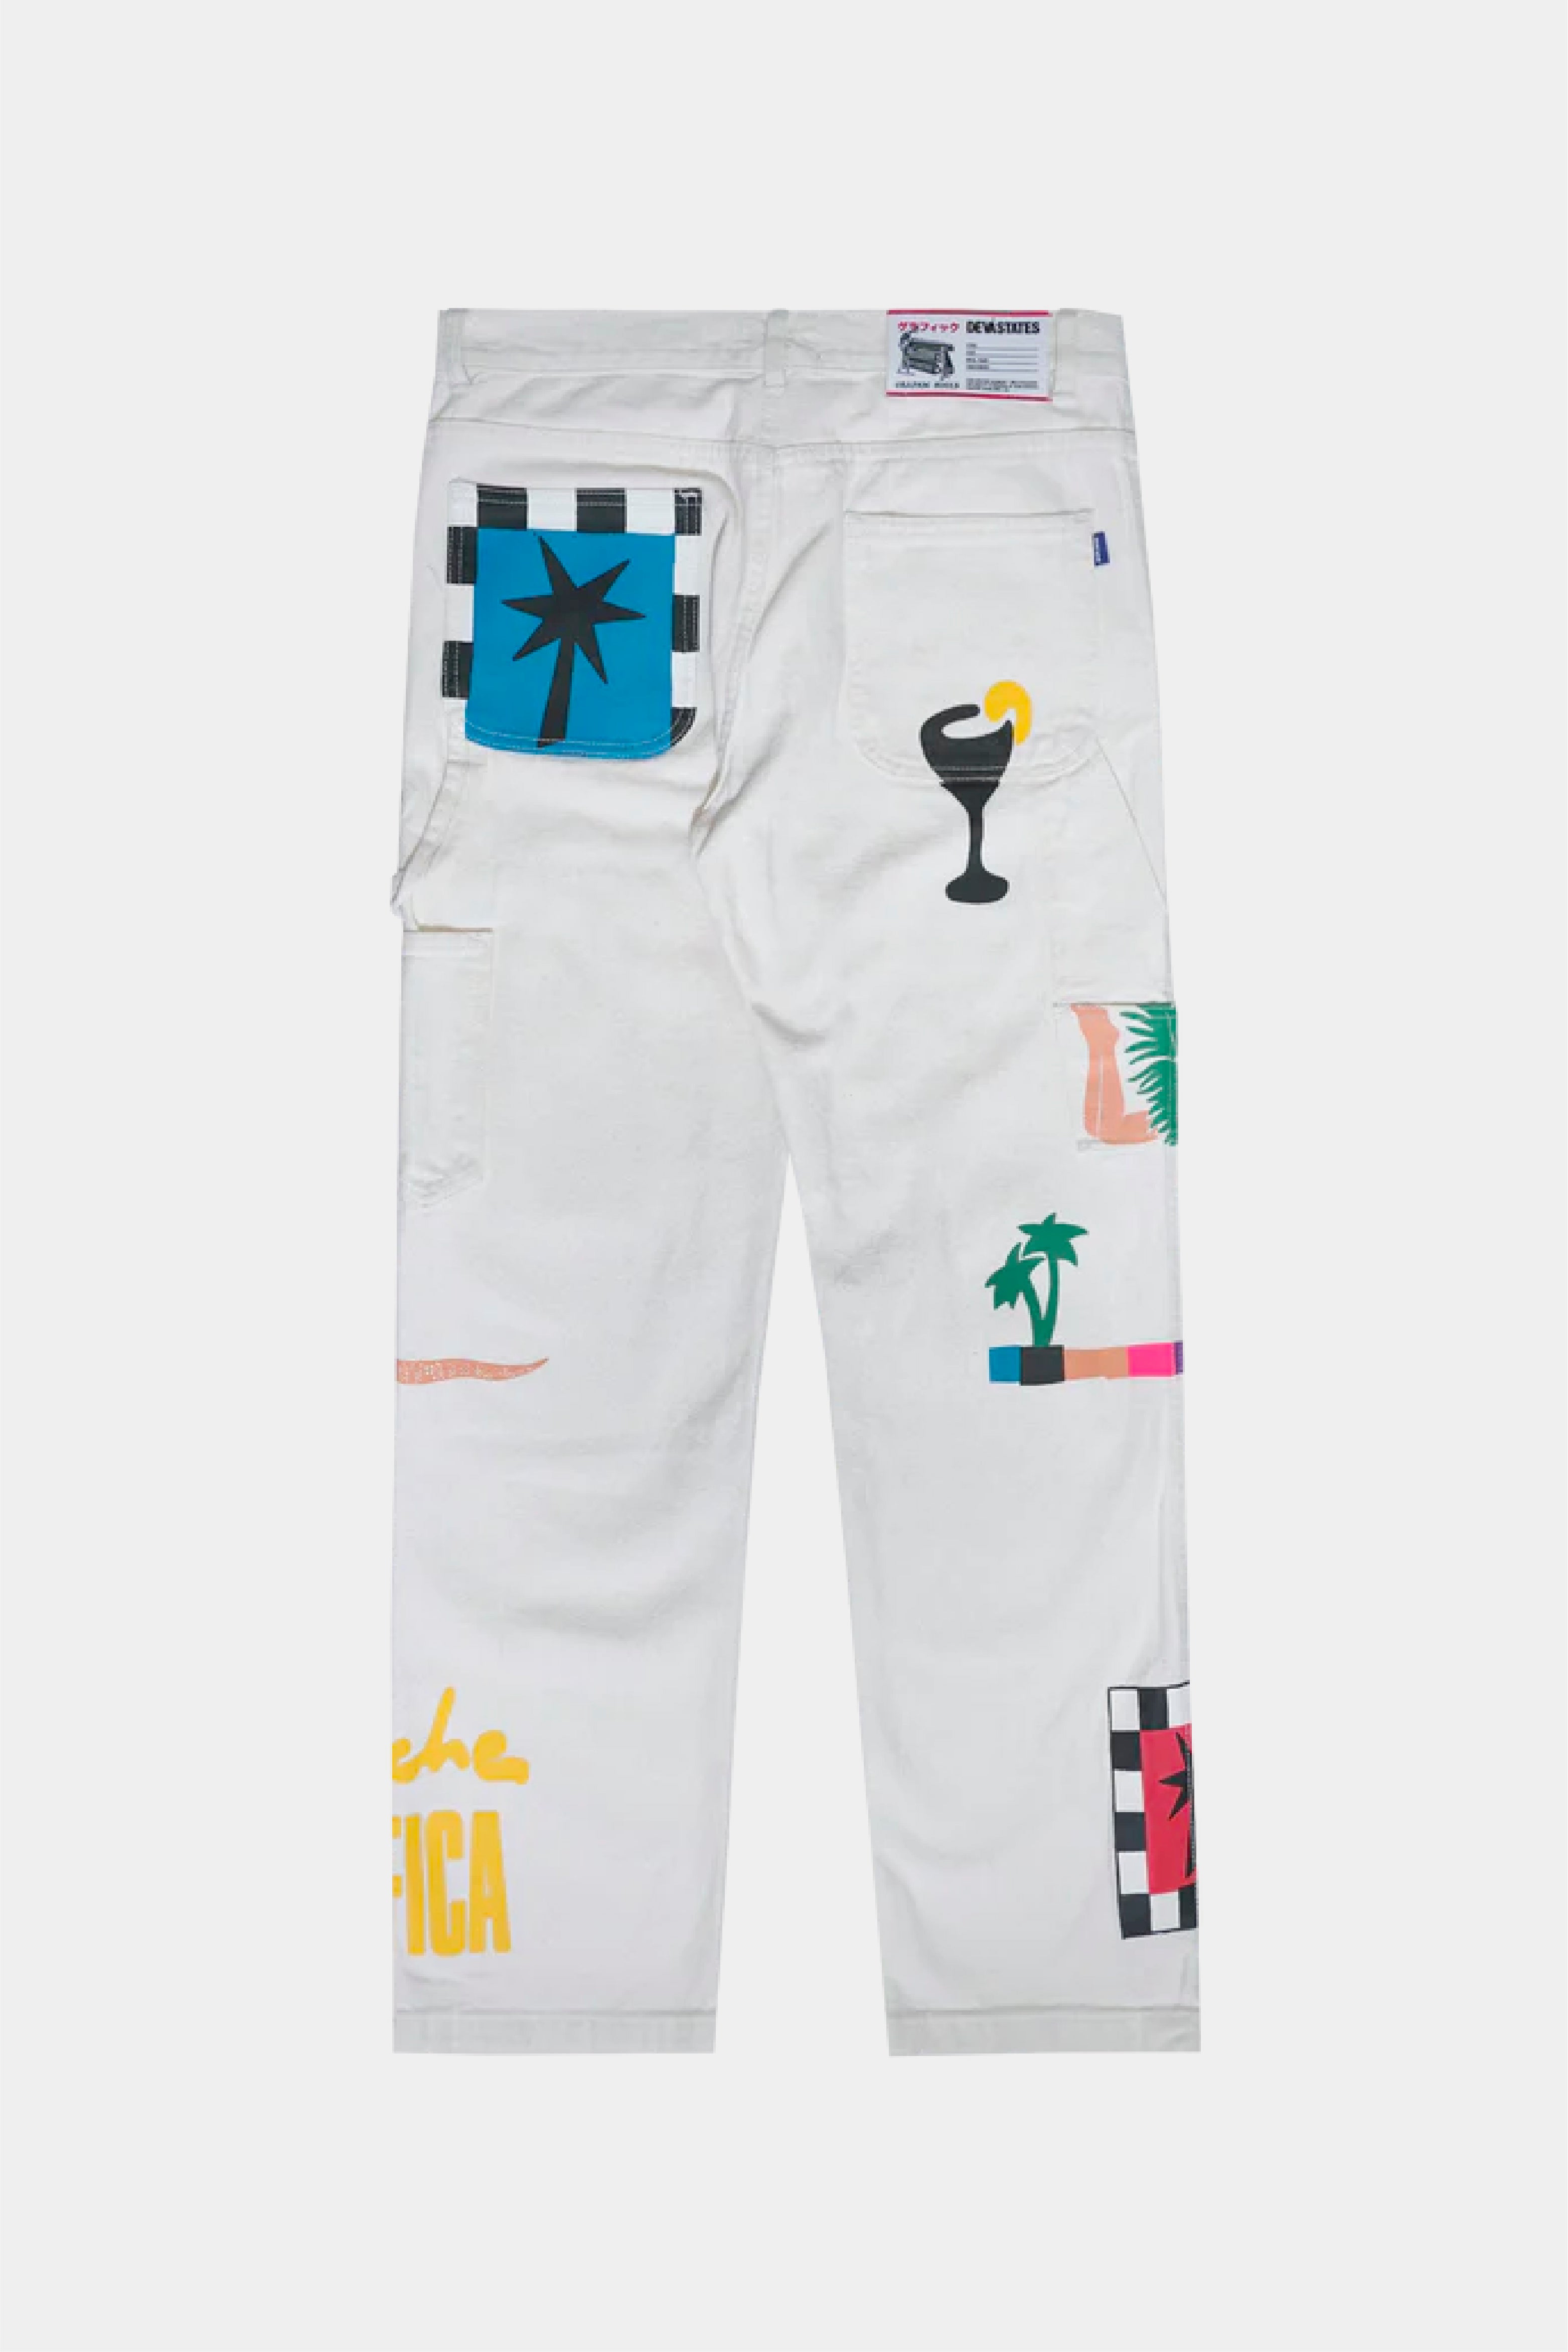 Selectshop FRAME - DEVA STATES Palmera Double Knee Printed Pants Bottoms Concept Store Dubai